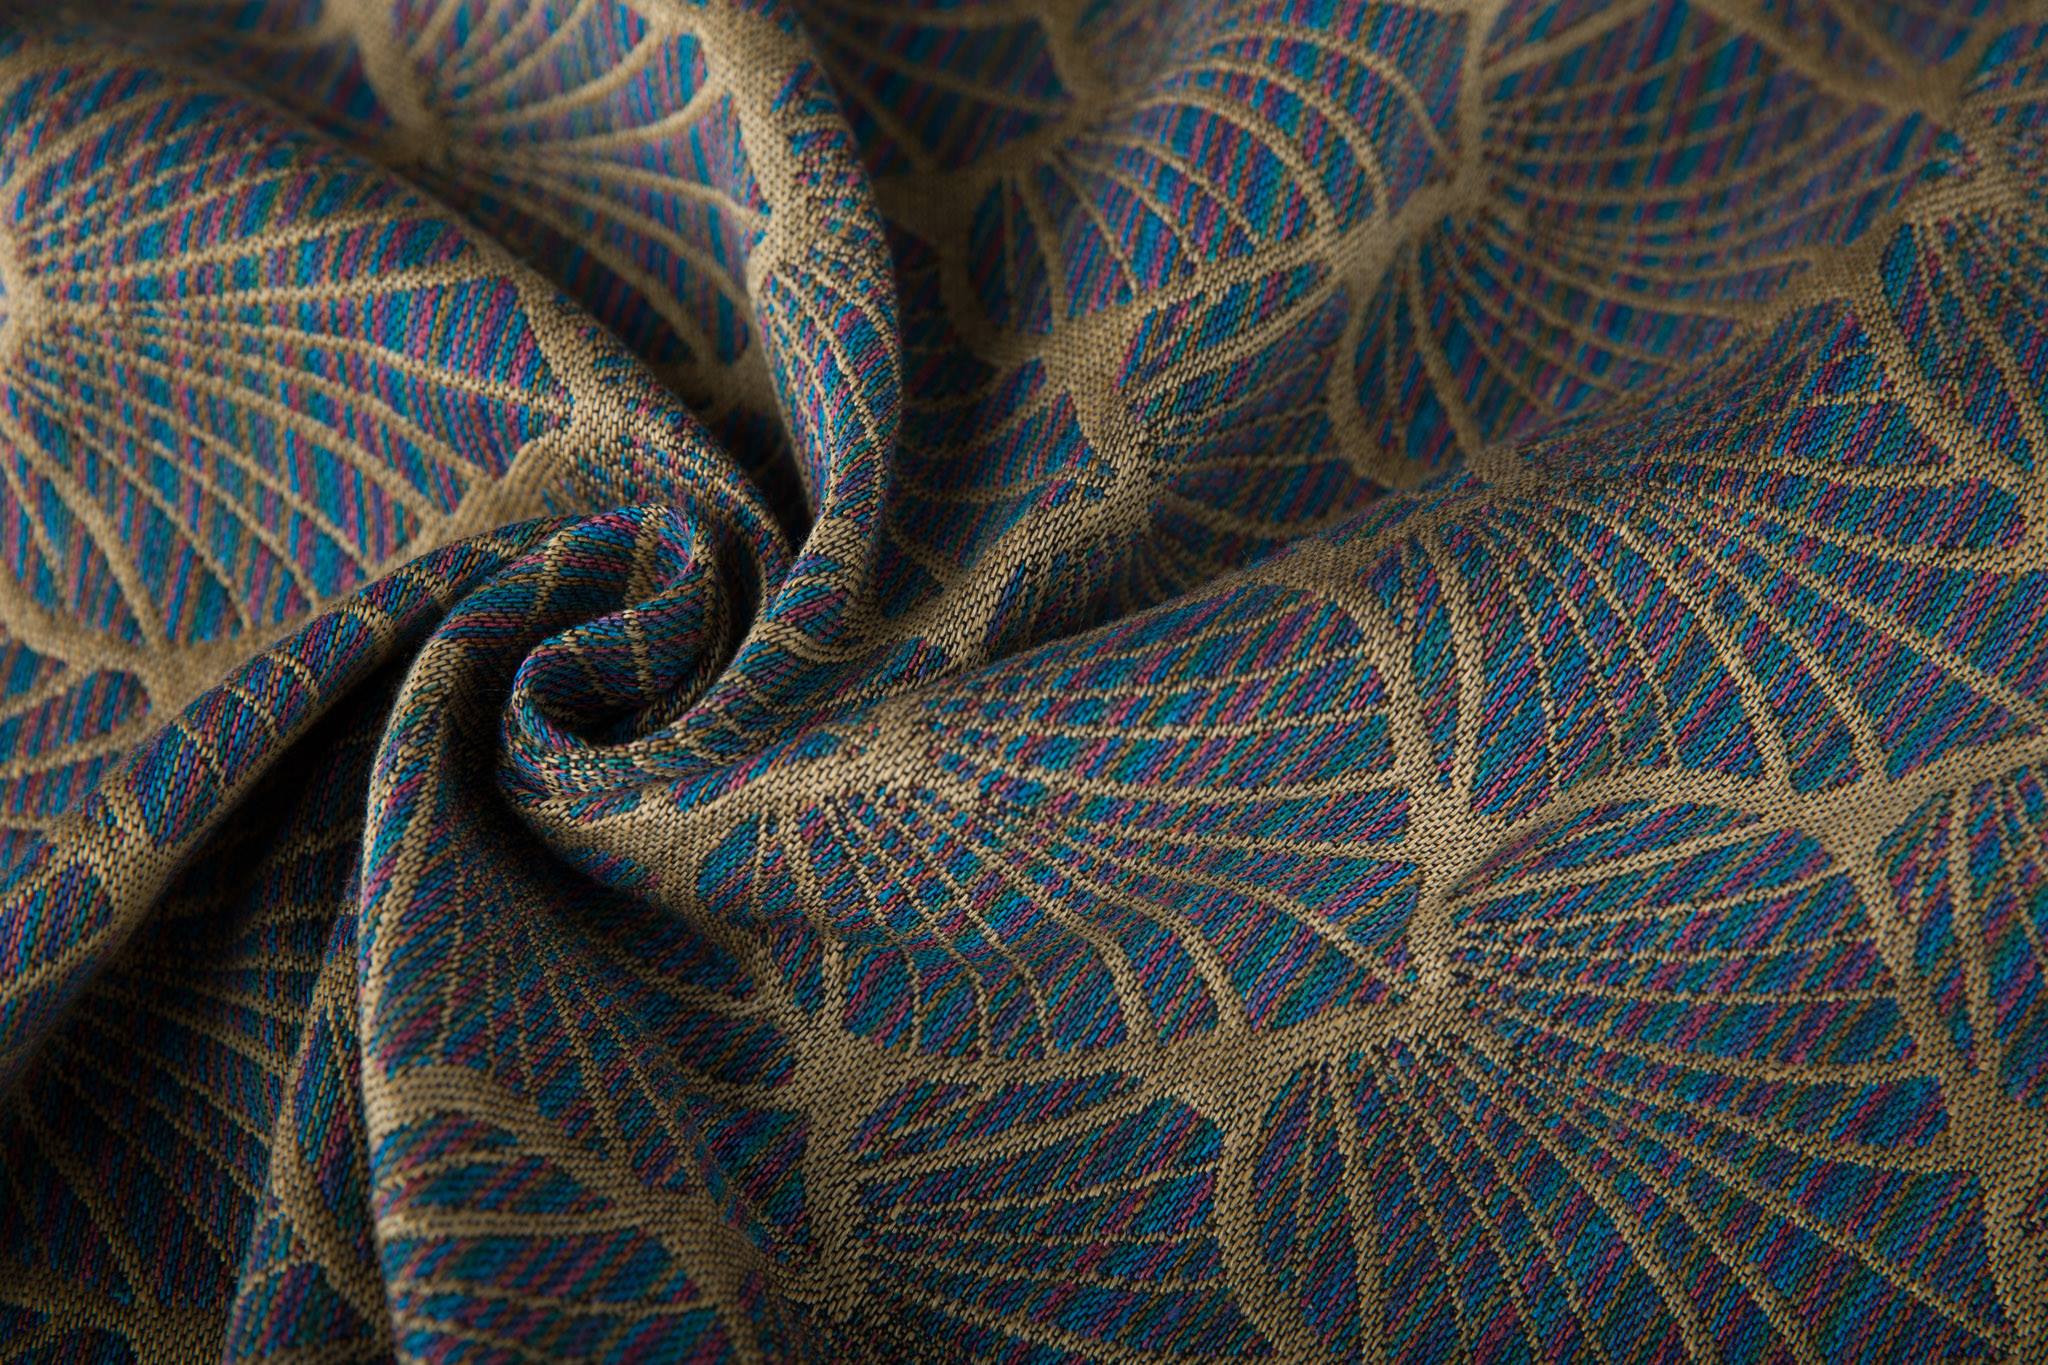 Linuschka Ipomée Ipomee Arcobaleno (japanese silk, лен) Image